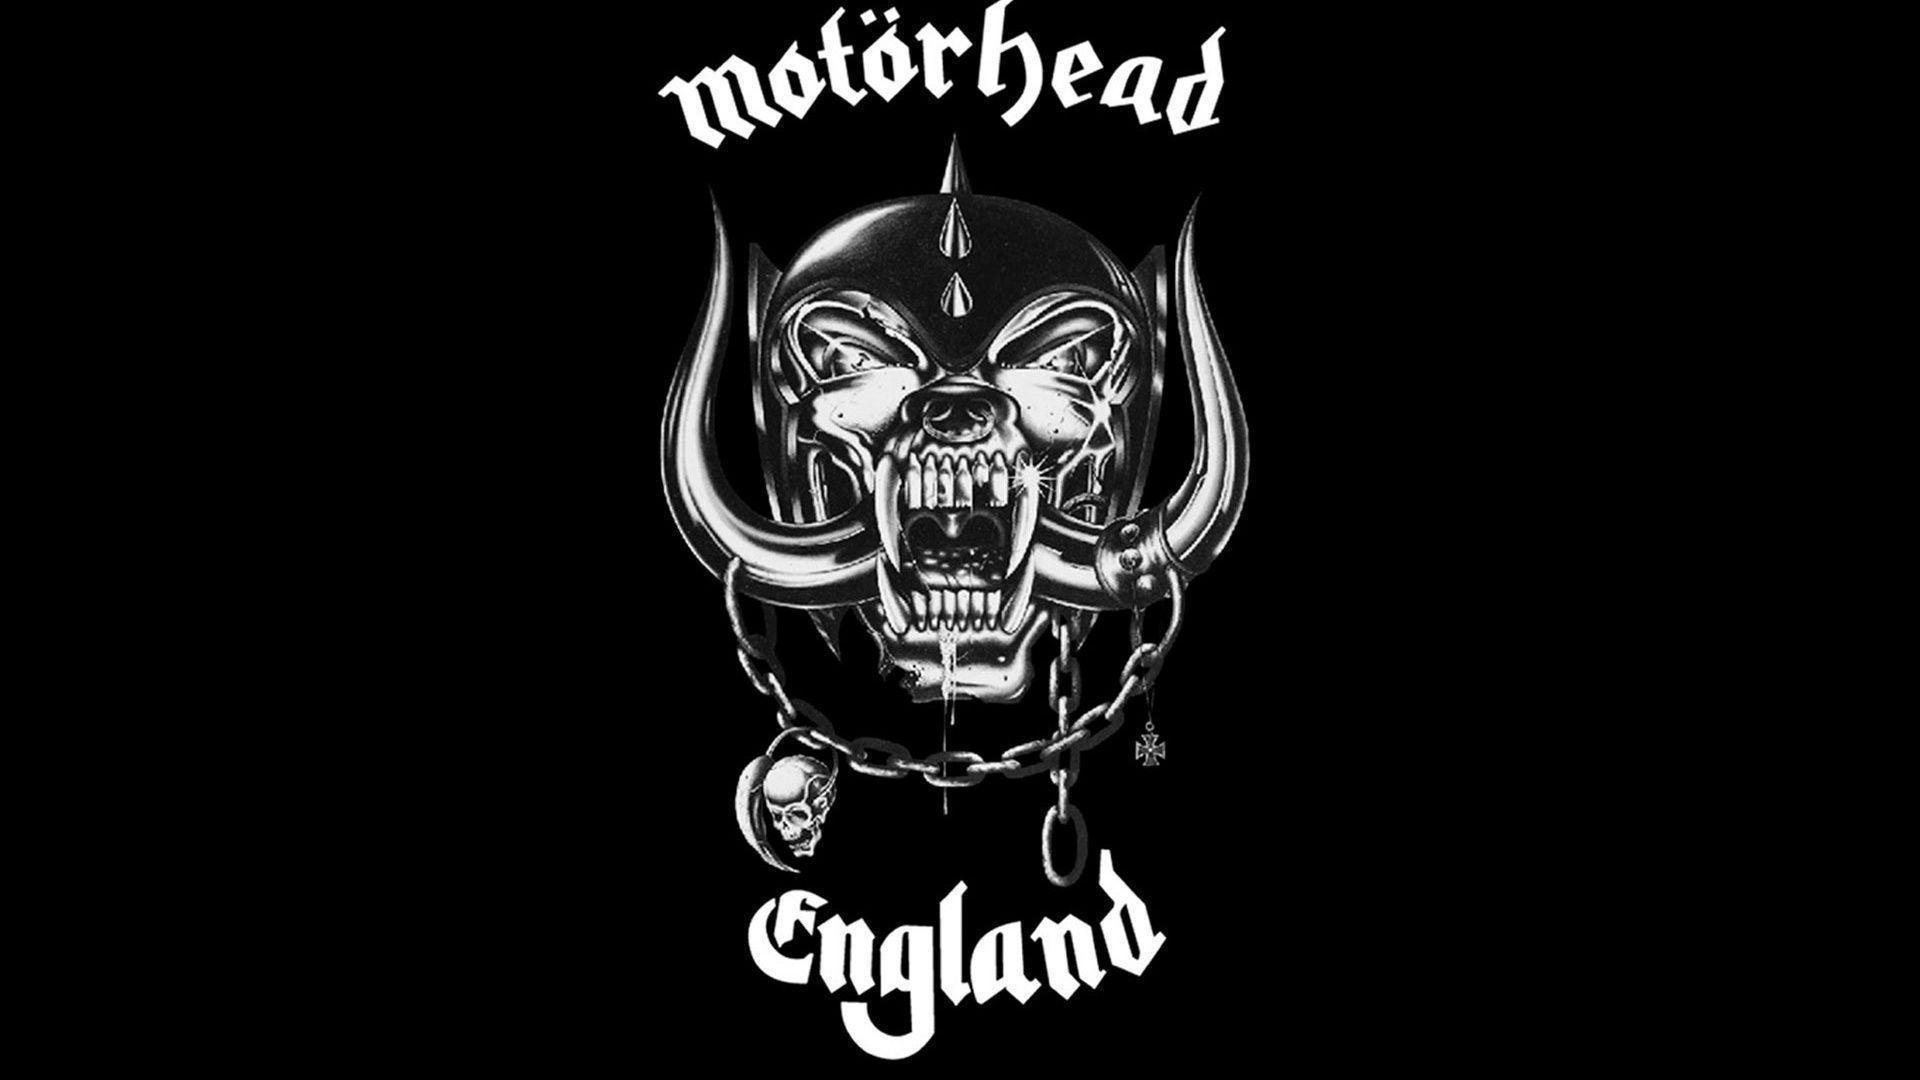 Motörhead wallpaper. Motörhead background